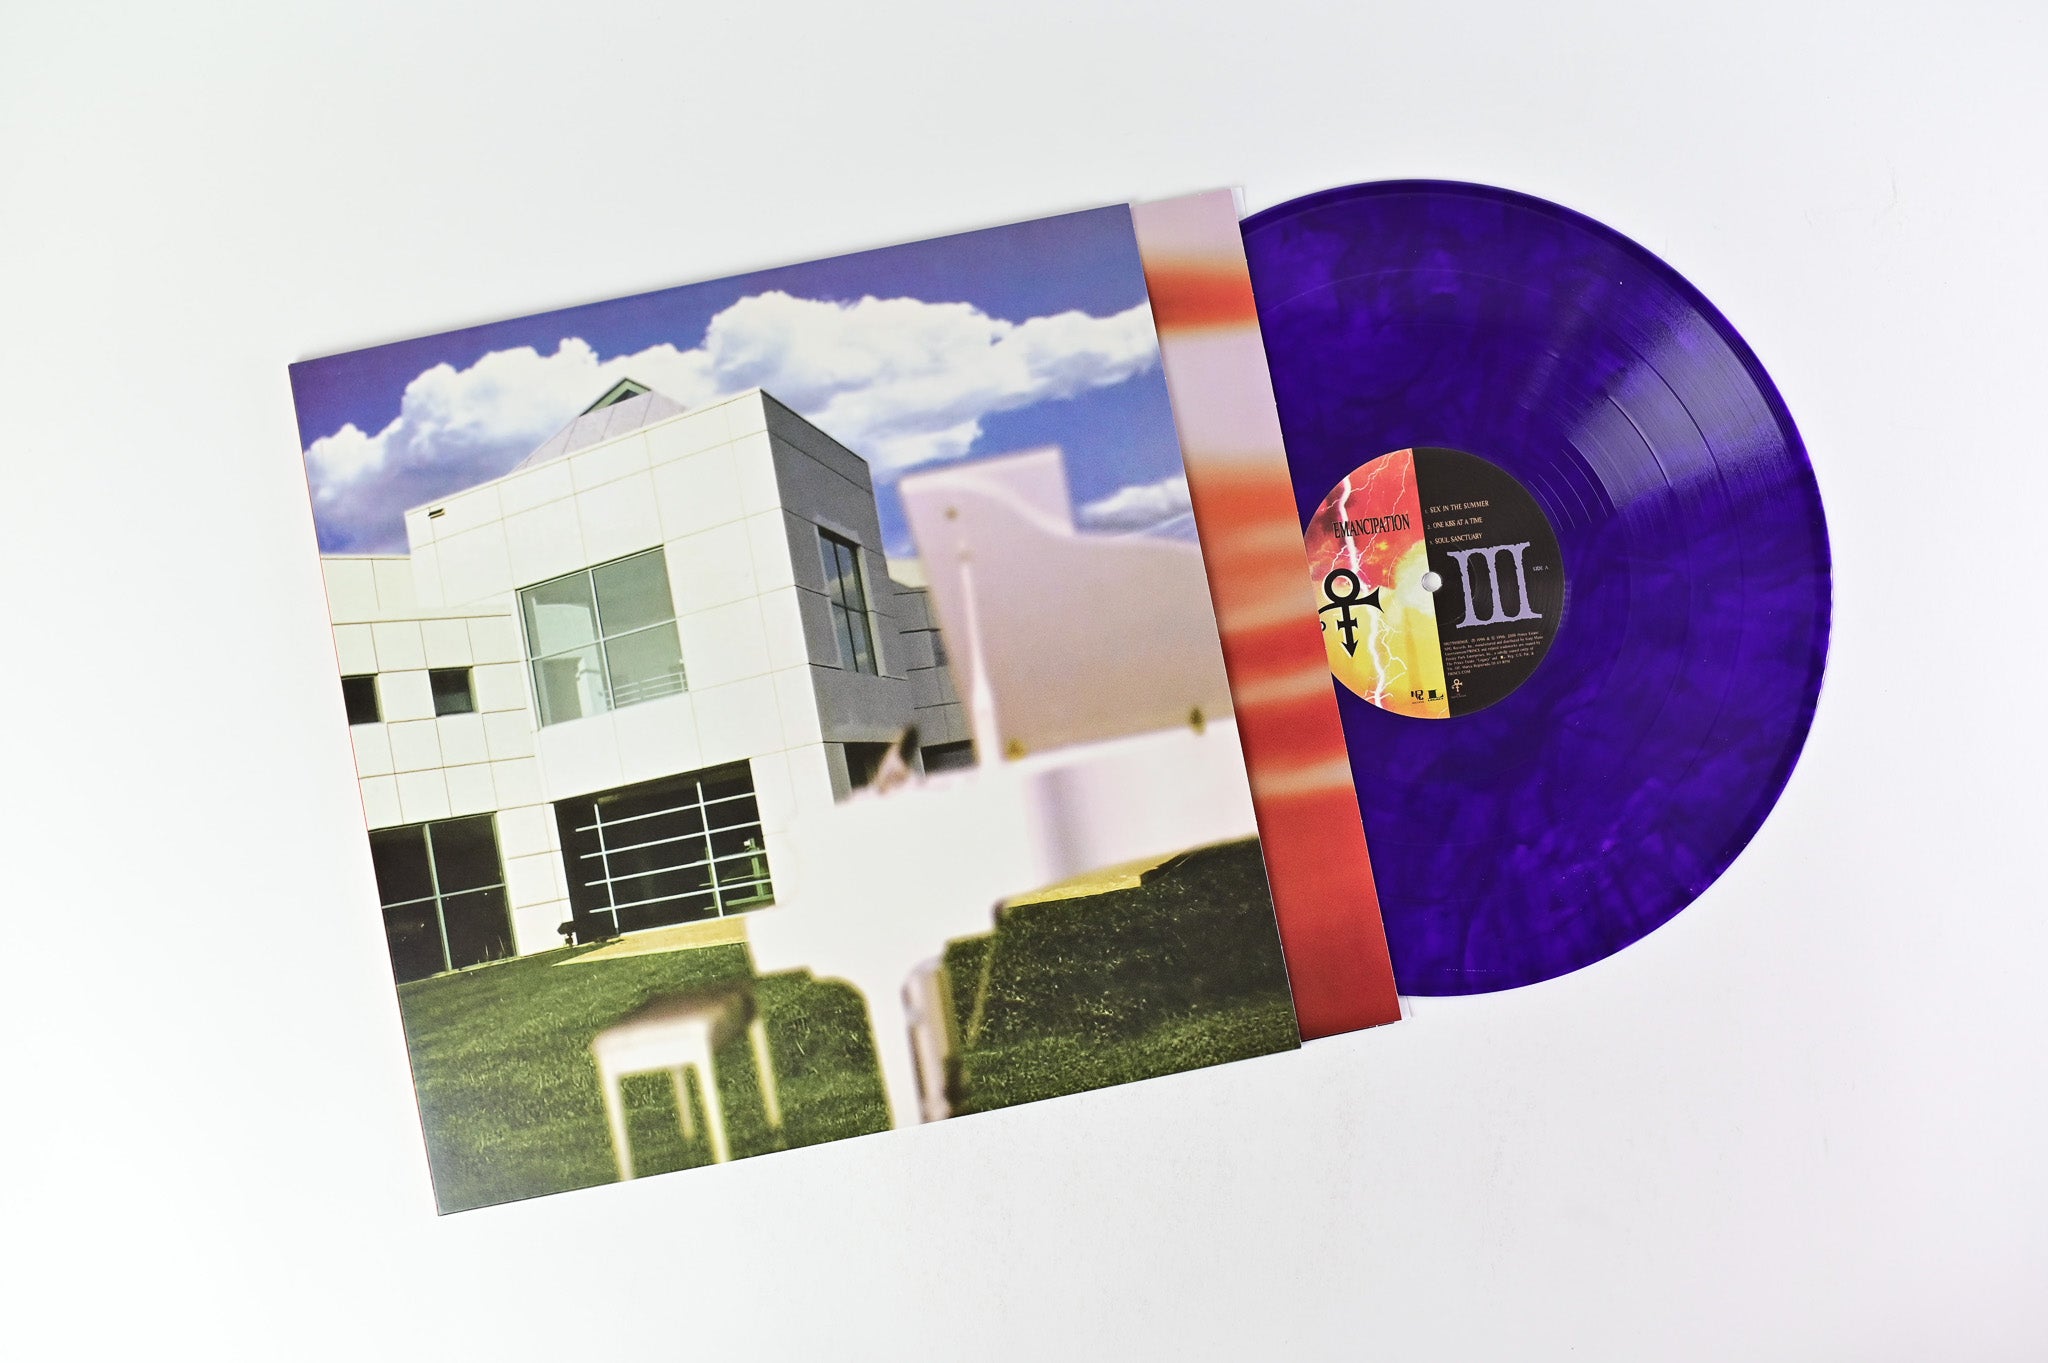 The Artist (Formerly Known As Prince) - Emancipation on NPG Ltd Purple Vinyl Box Set Reissue